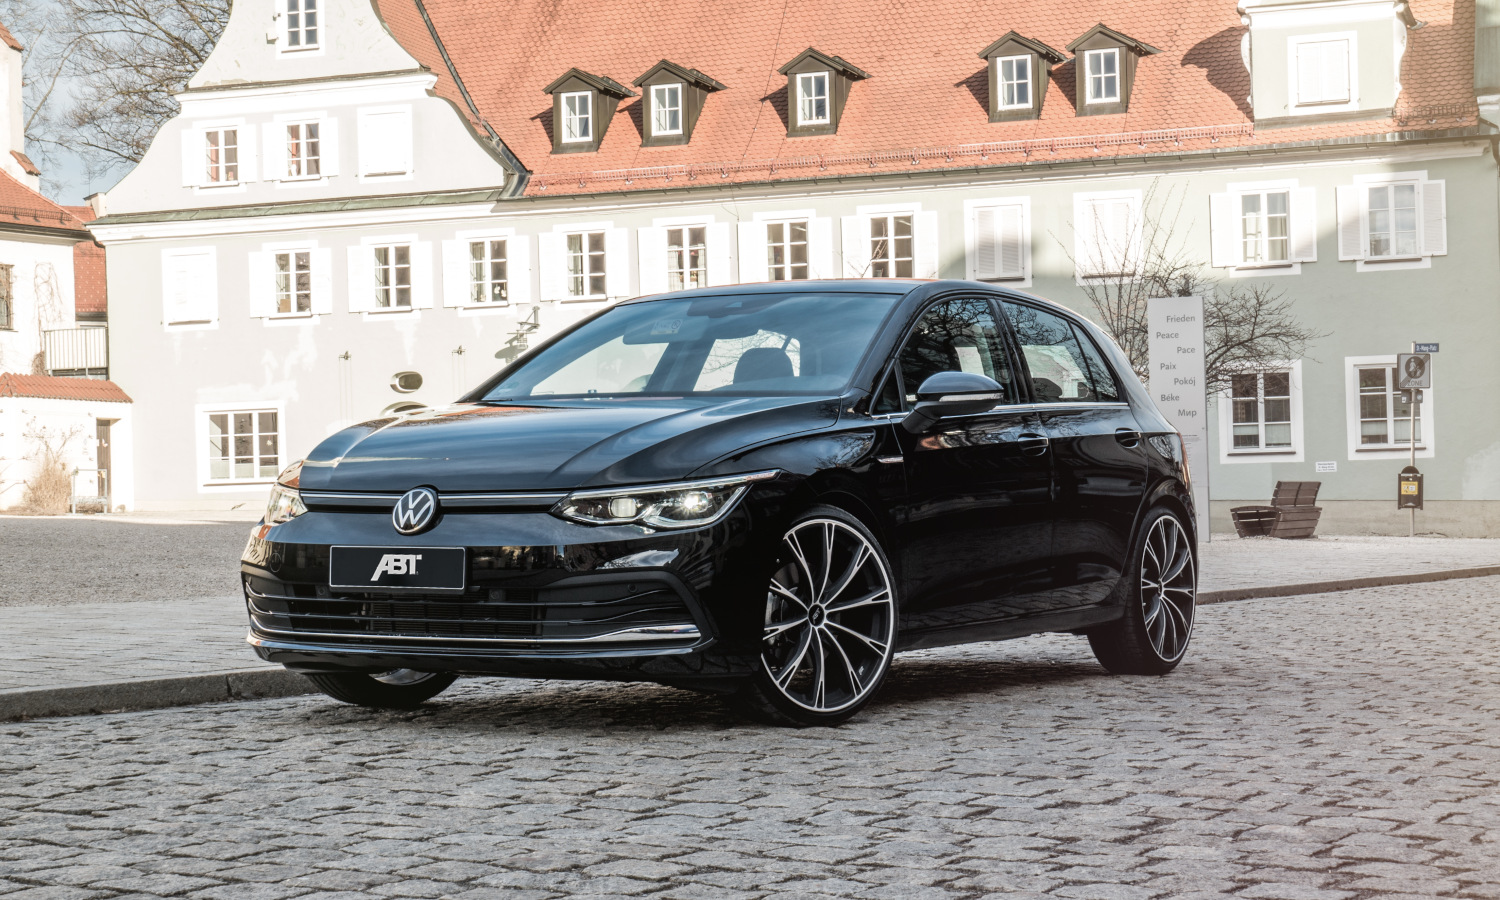 News - Audi Tuning, VW Tuning, Chiptuning von ABT Sportsline.